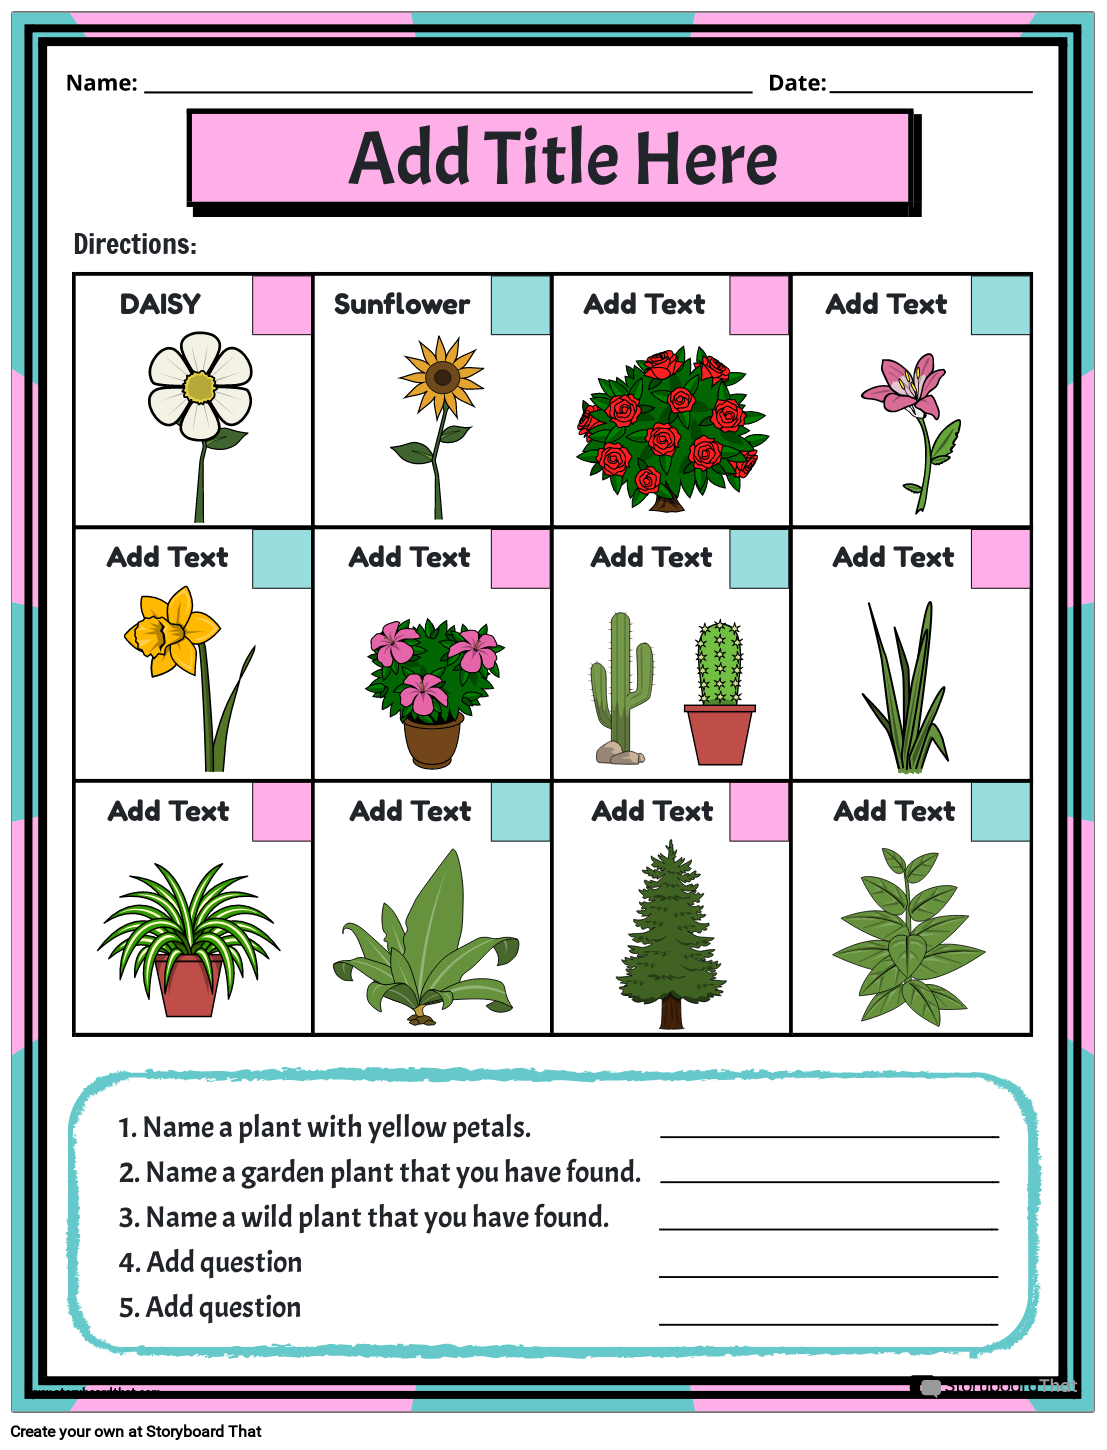 plant-scavenger-hunt-worksheet-storyboard-by-templates